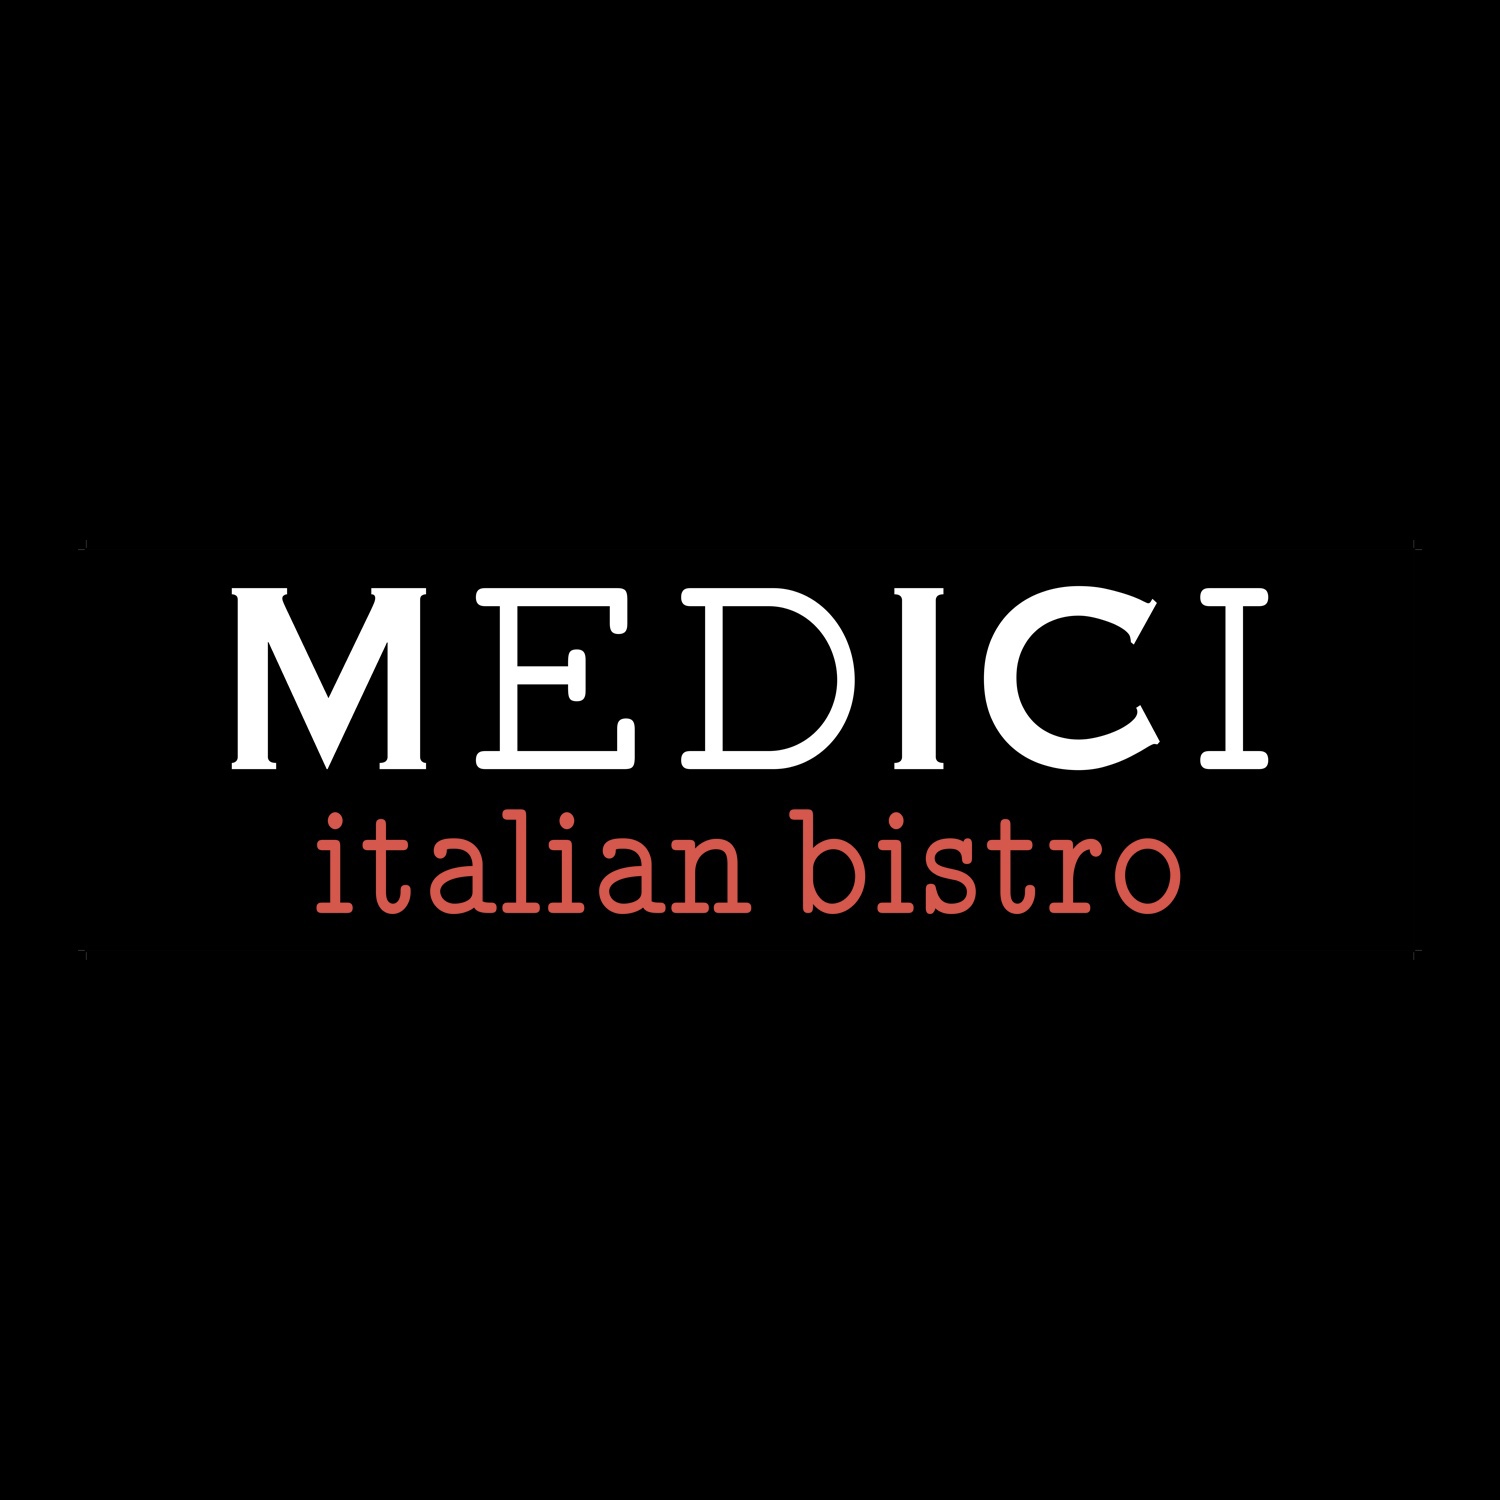 Medici Italian bistro